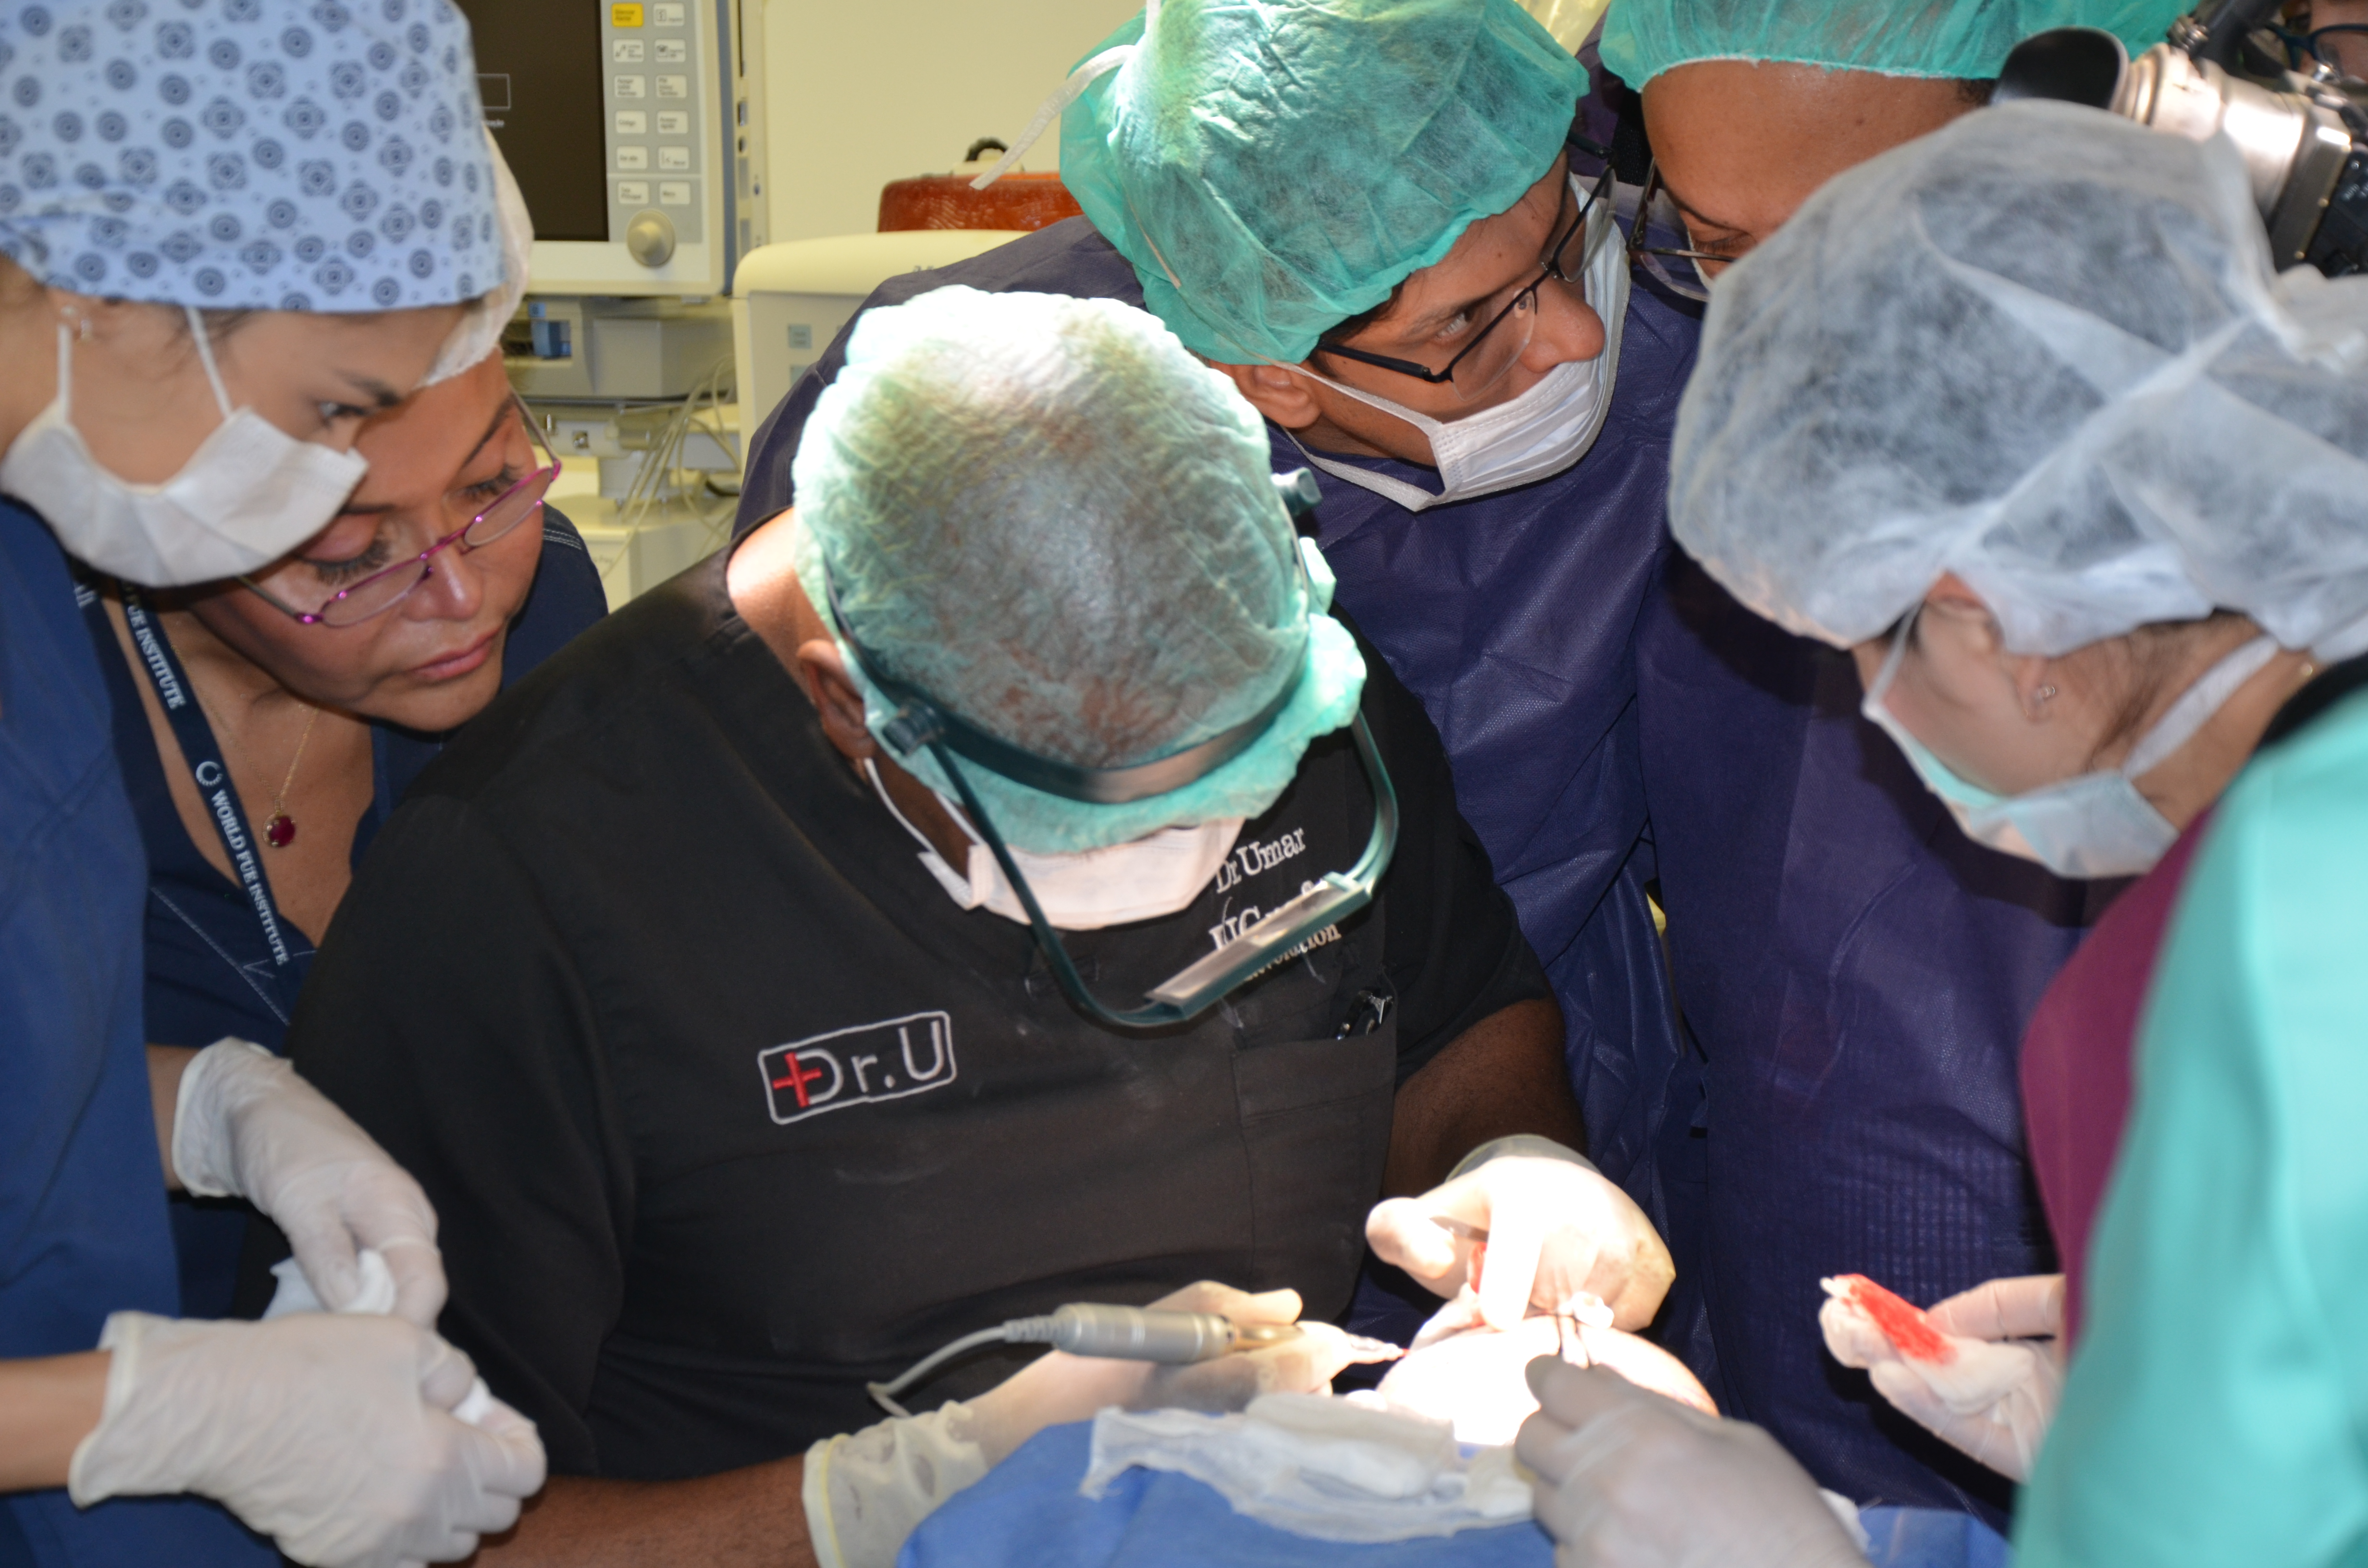 Dr. Sanusi Umar, inventor of the Dr.UGraft Revolution, demonstrates the advanced hair transplant system in live surgery. 